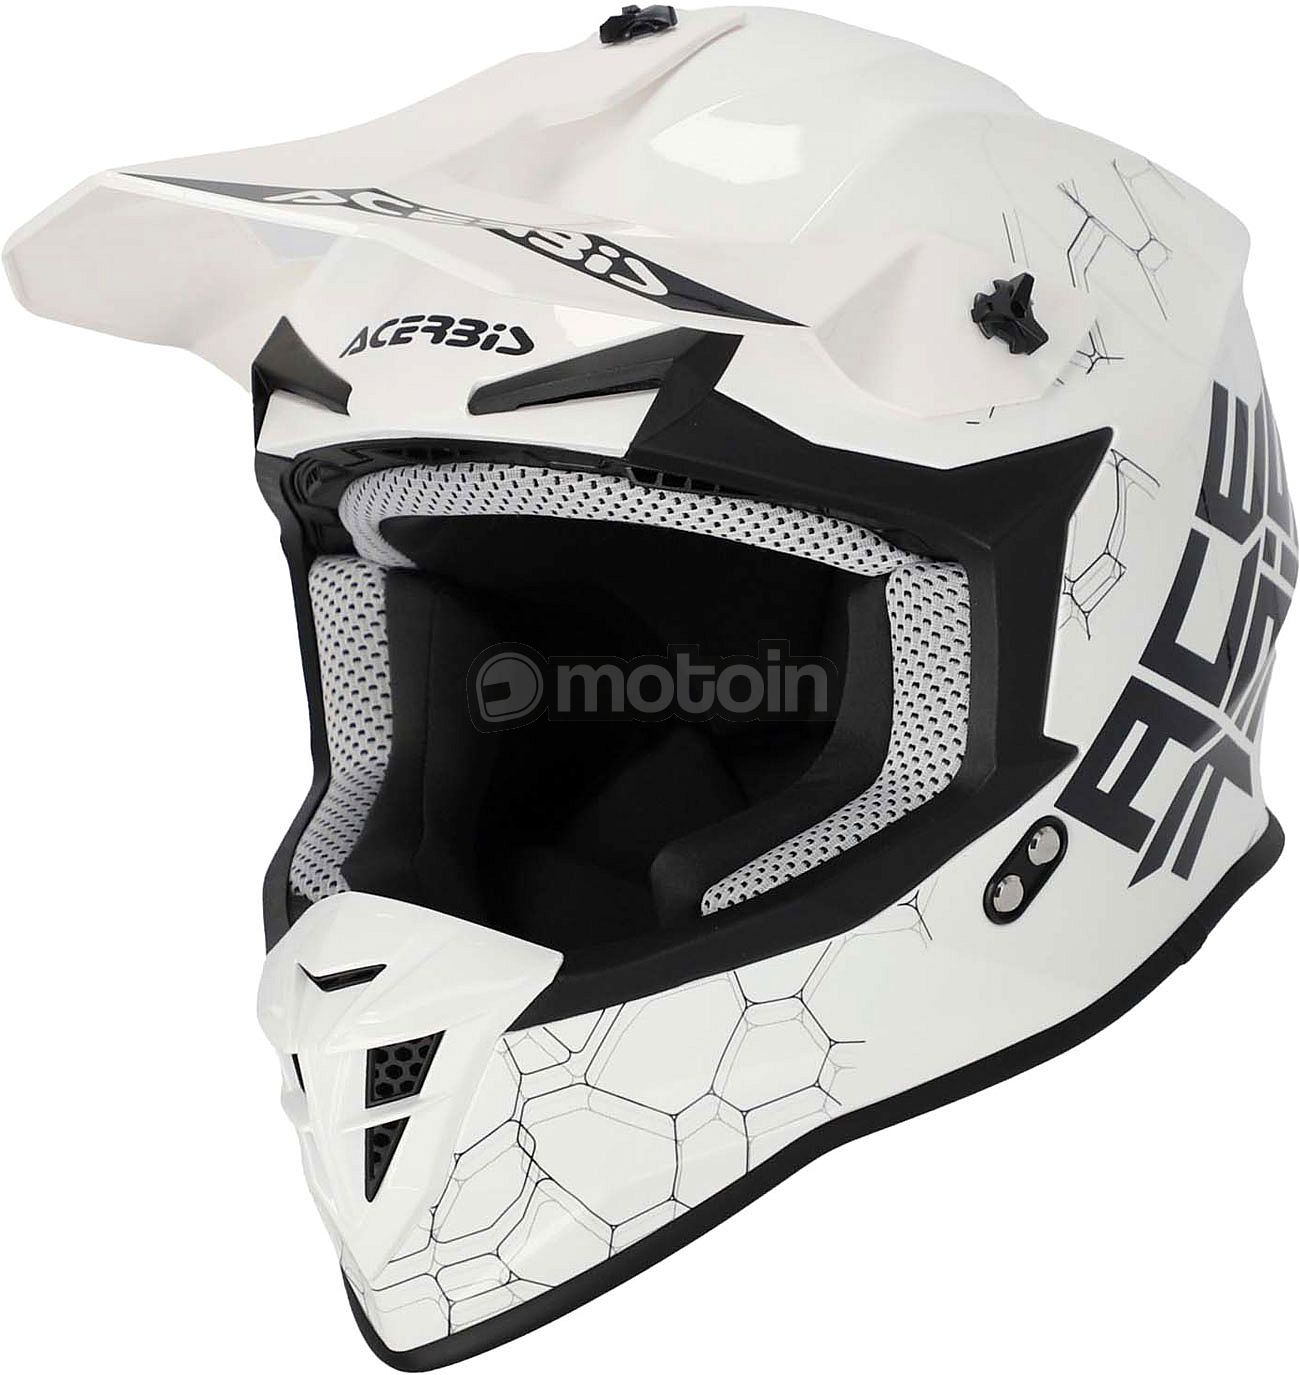 Acerbis Linear S24, capacete cruzado